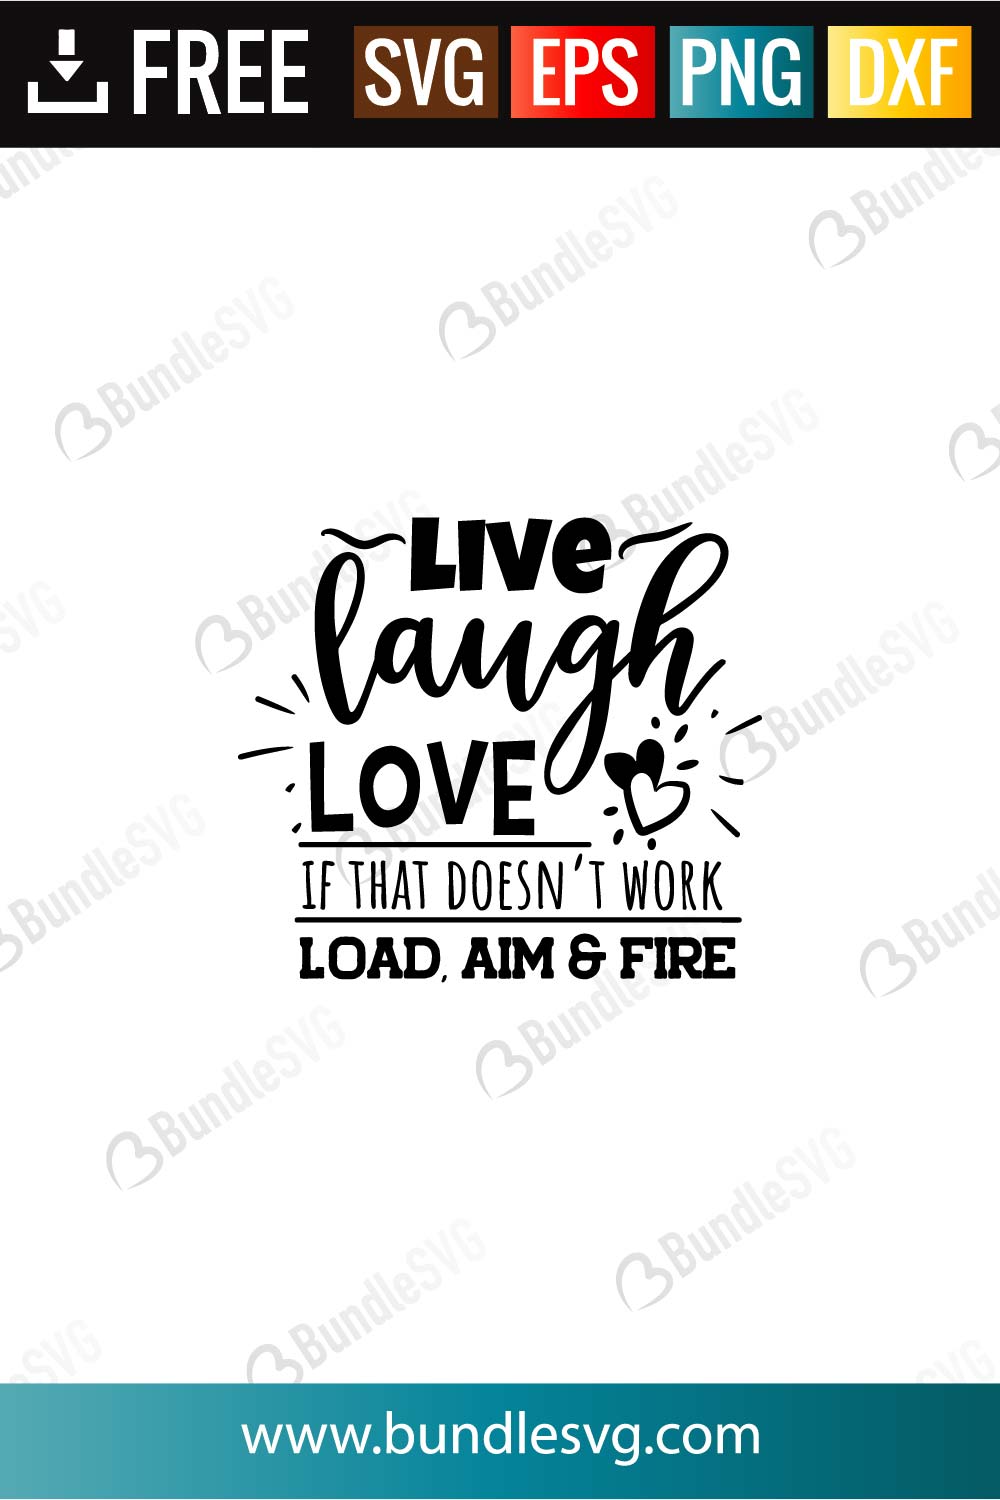 Download Live Laugh Love Svg Dxf Downloadable File Buy 3 Get 30 Off Coupon Buy3get30 Digital Prints Art Collectibles Efp Osteology Org